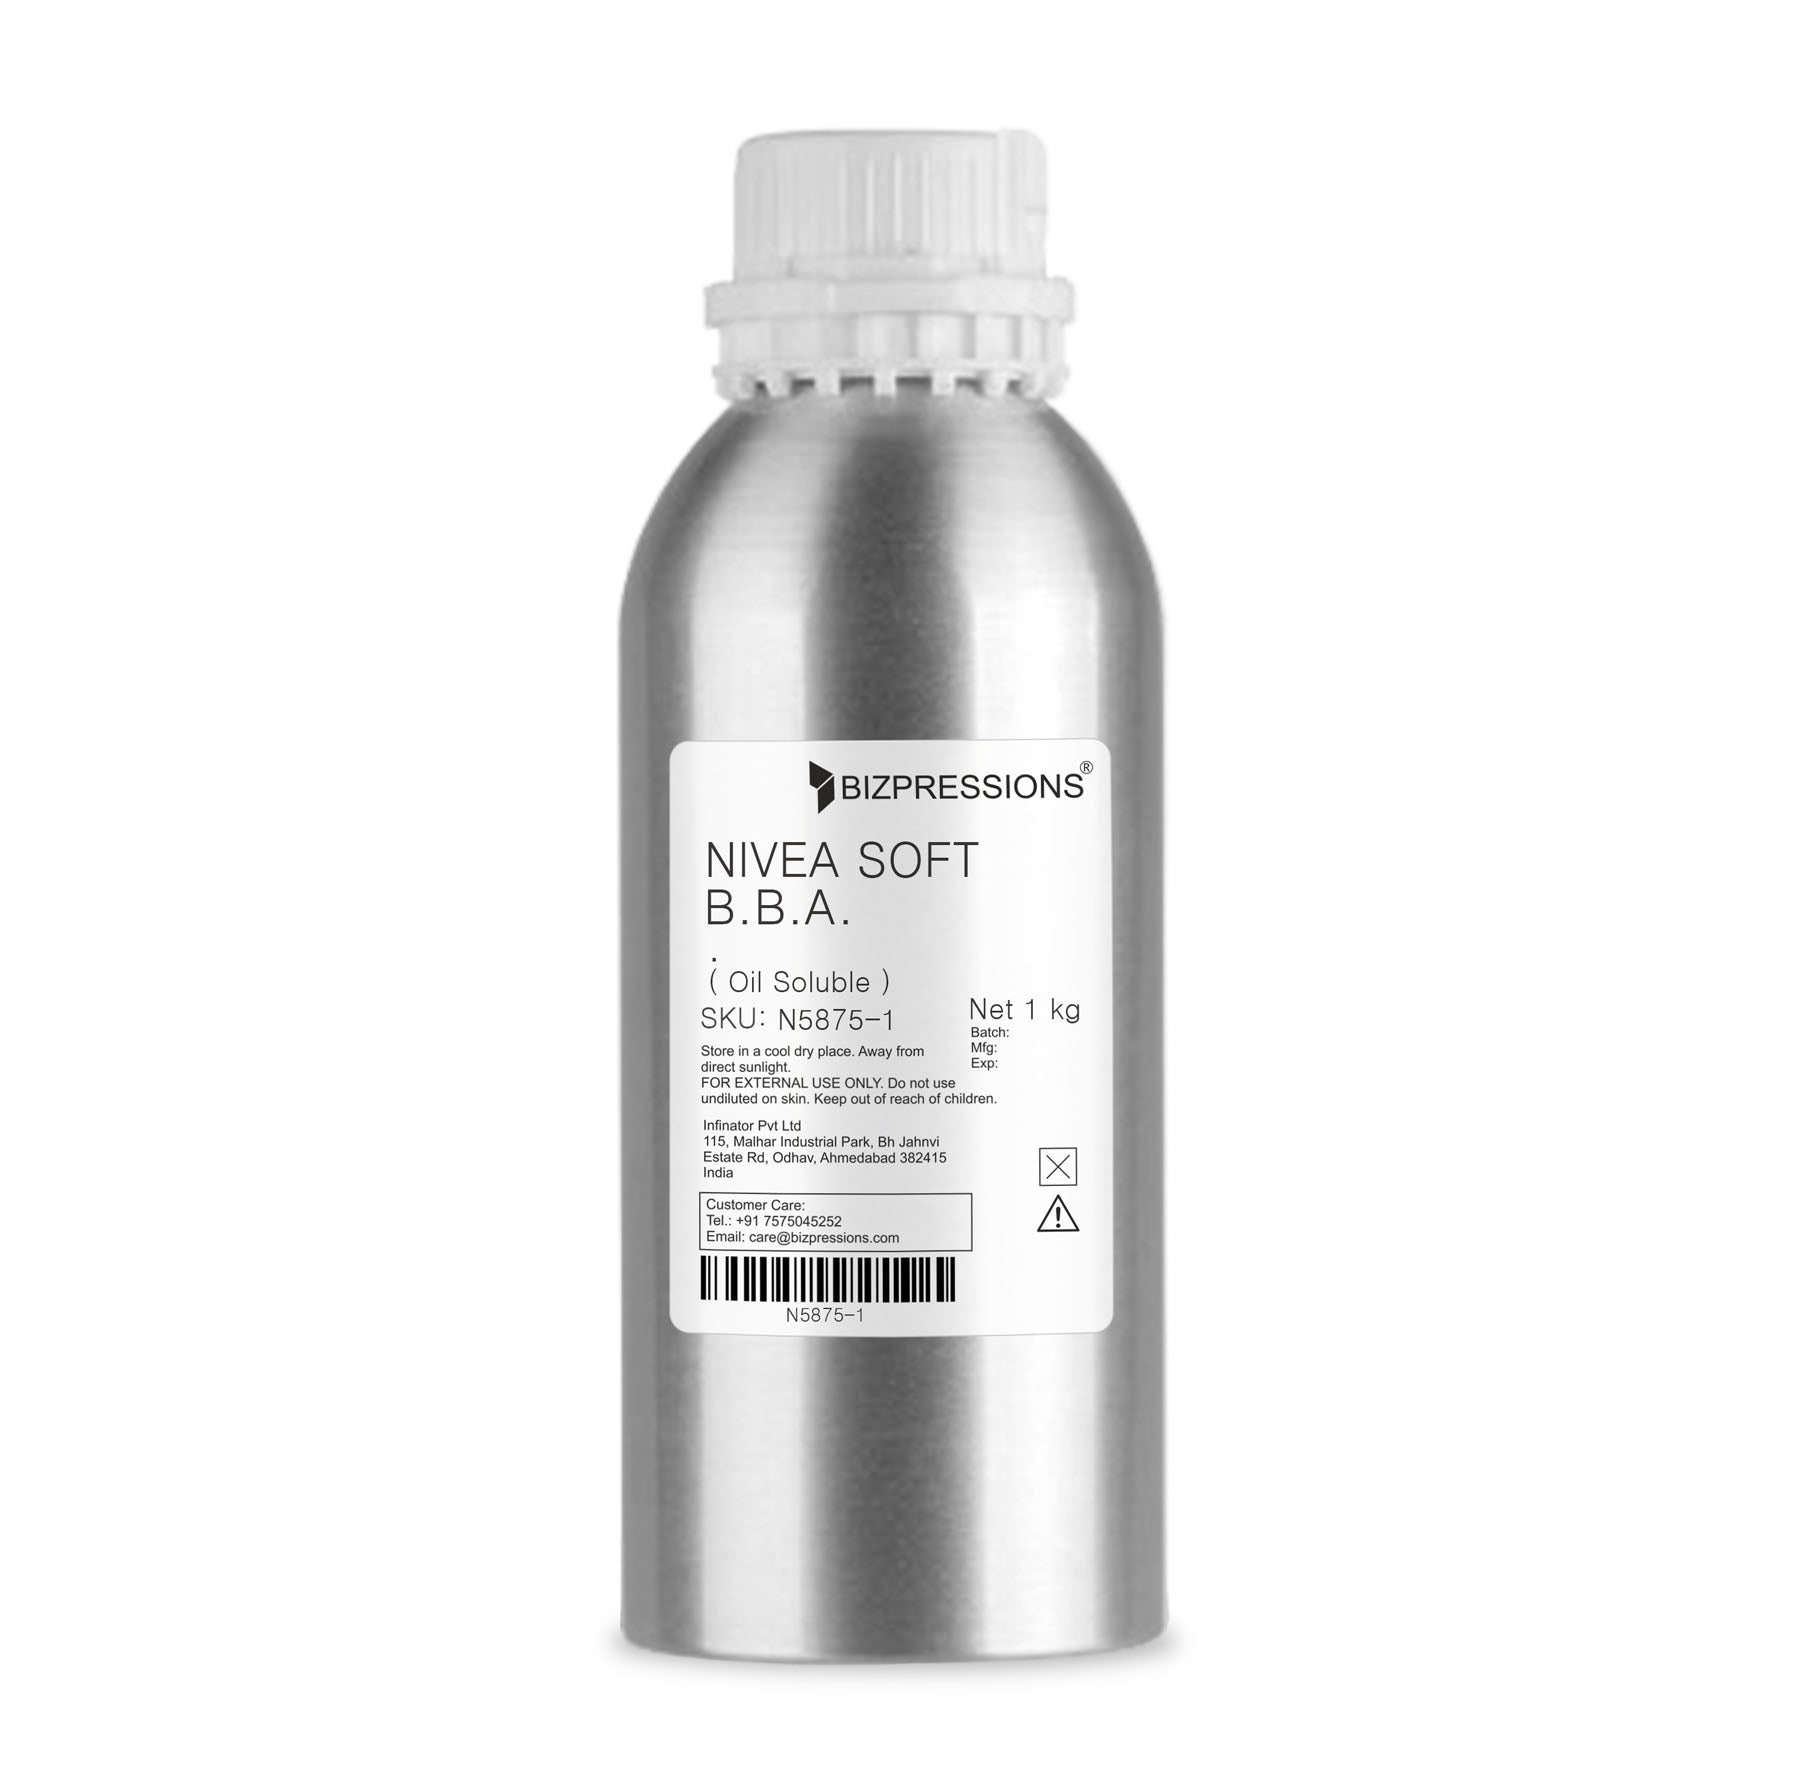 NIVEA SOFT B.B.A. - Fragrance ( Oil Soluble ) - 1 kg